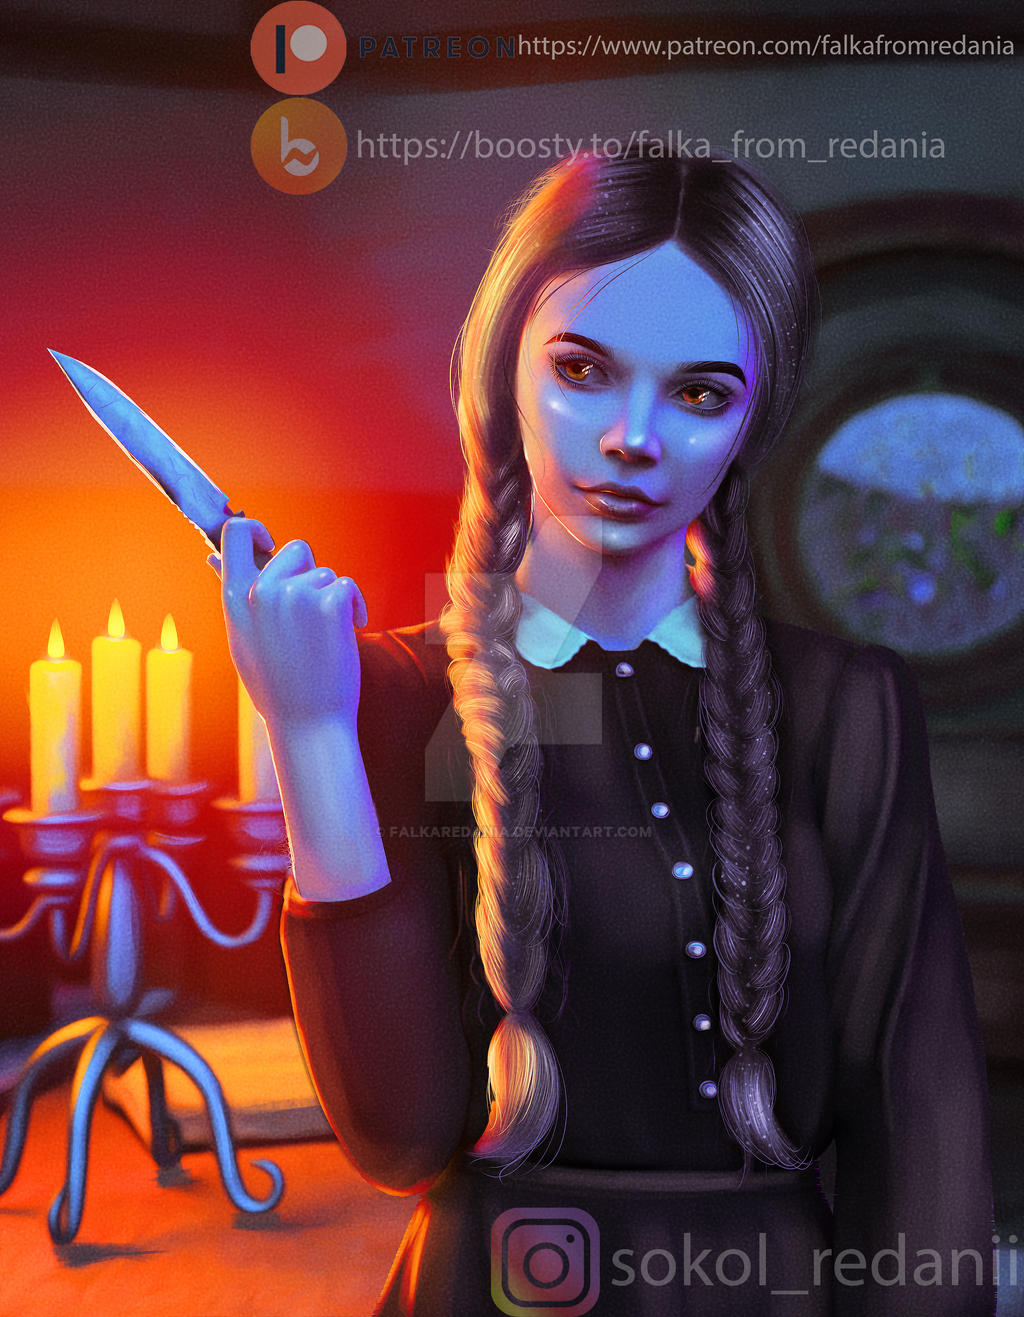 Wednesday Addams by SlinkySloth on DeviantArt